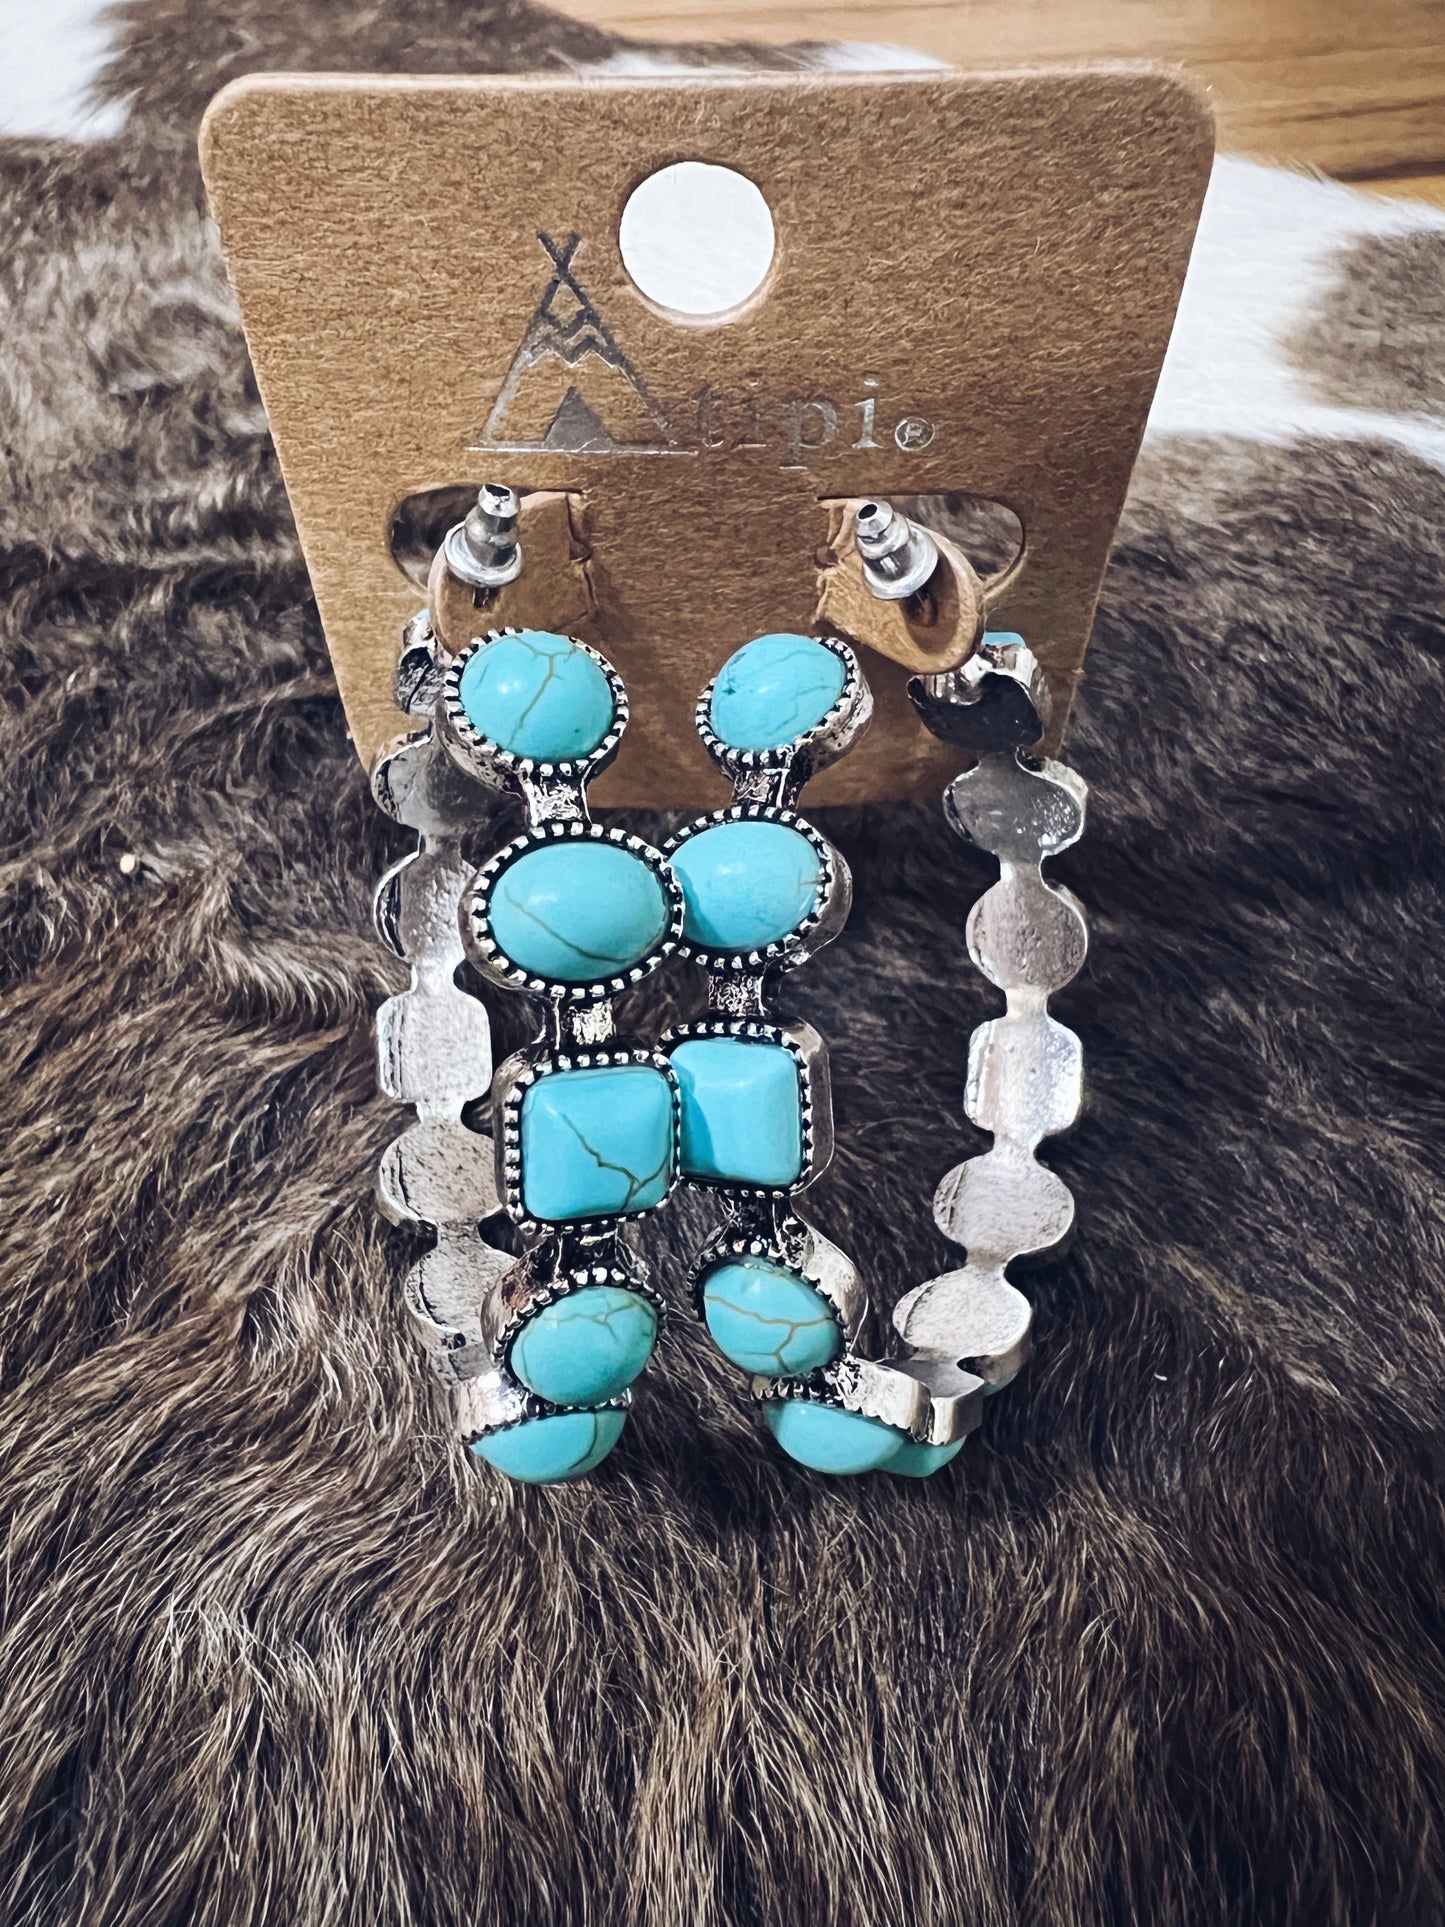 Hoop Earrings with Turquoise Stones